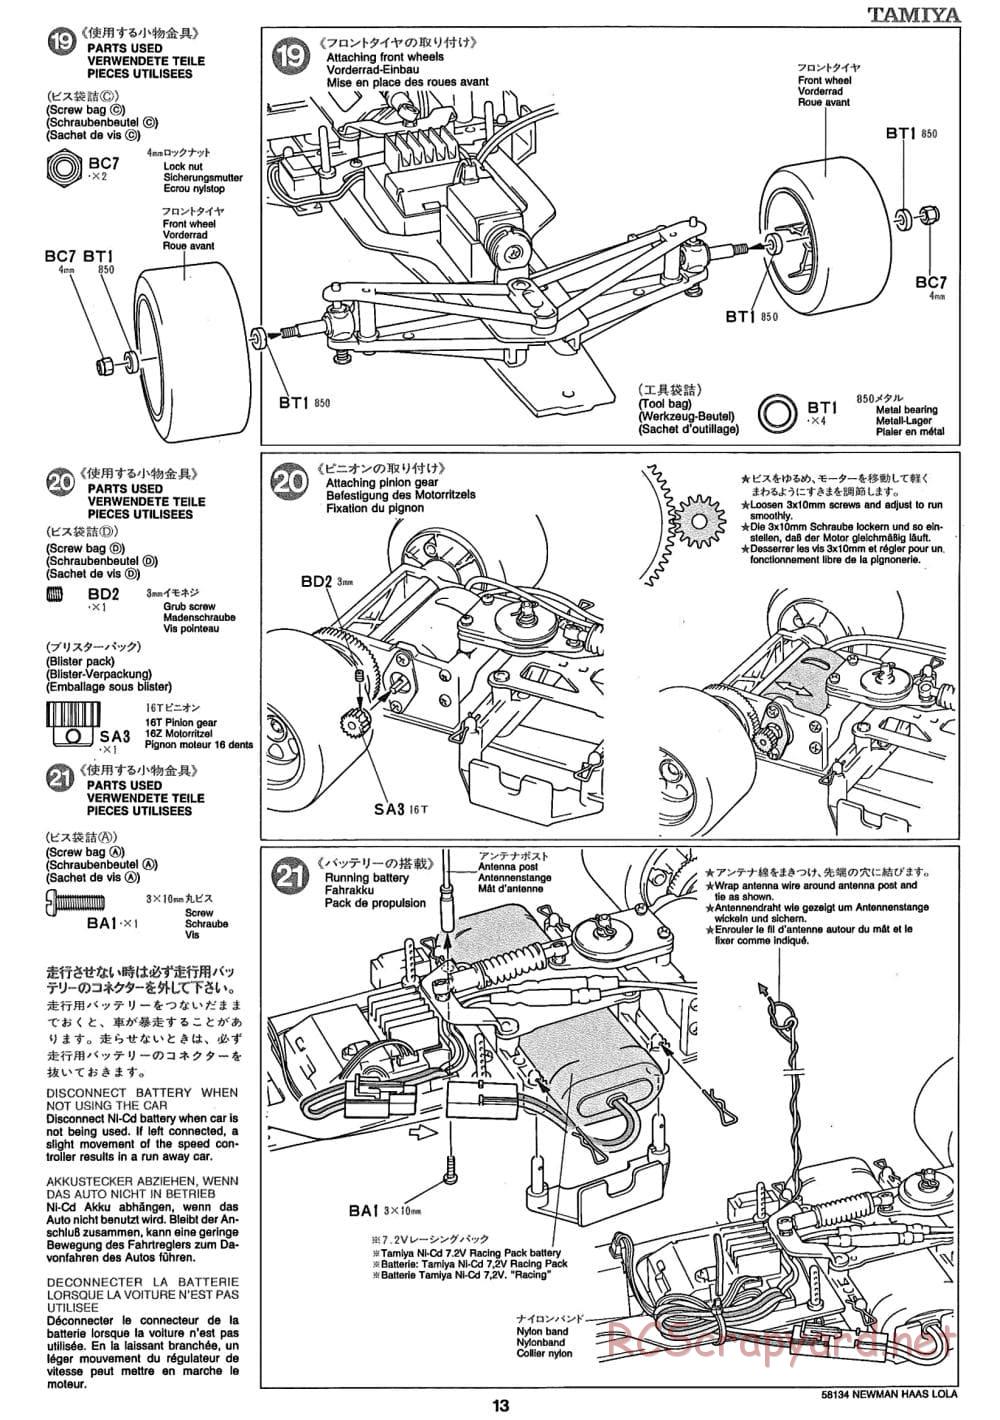 Tamiya - Newman Haas K-Mart Texaco Lola T93/00 Ford - F103L Chassis - Manual - Page 13